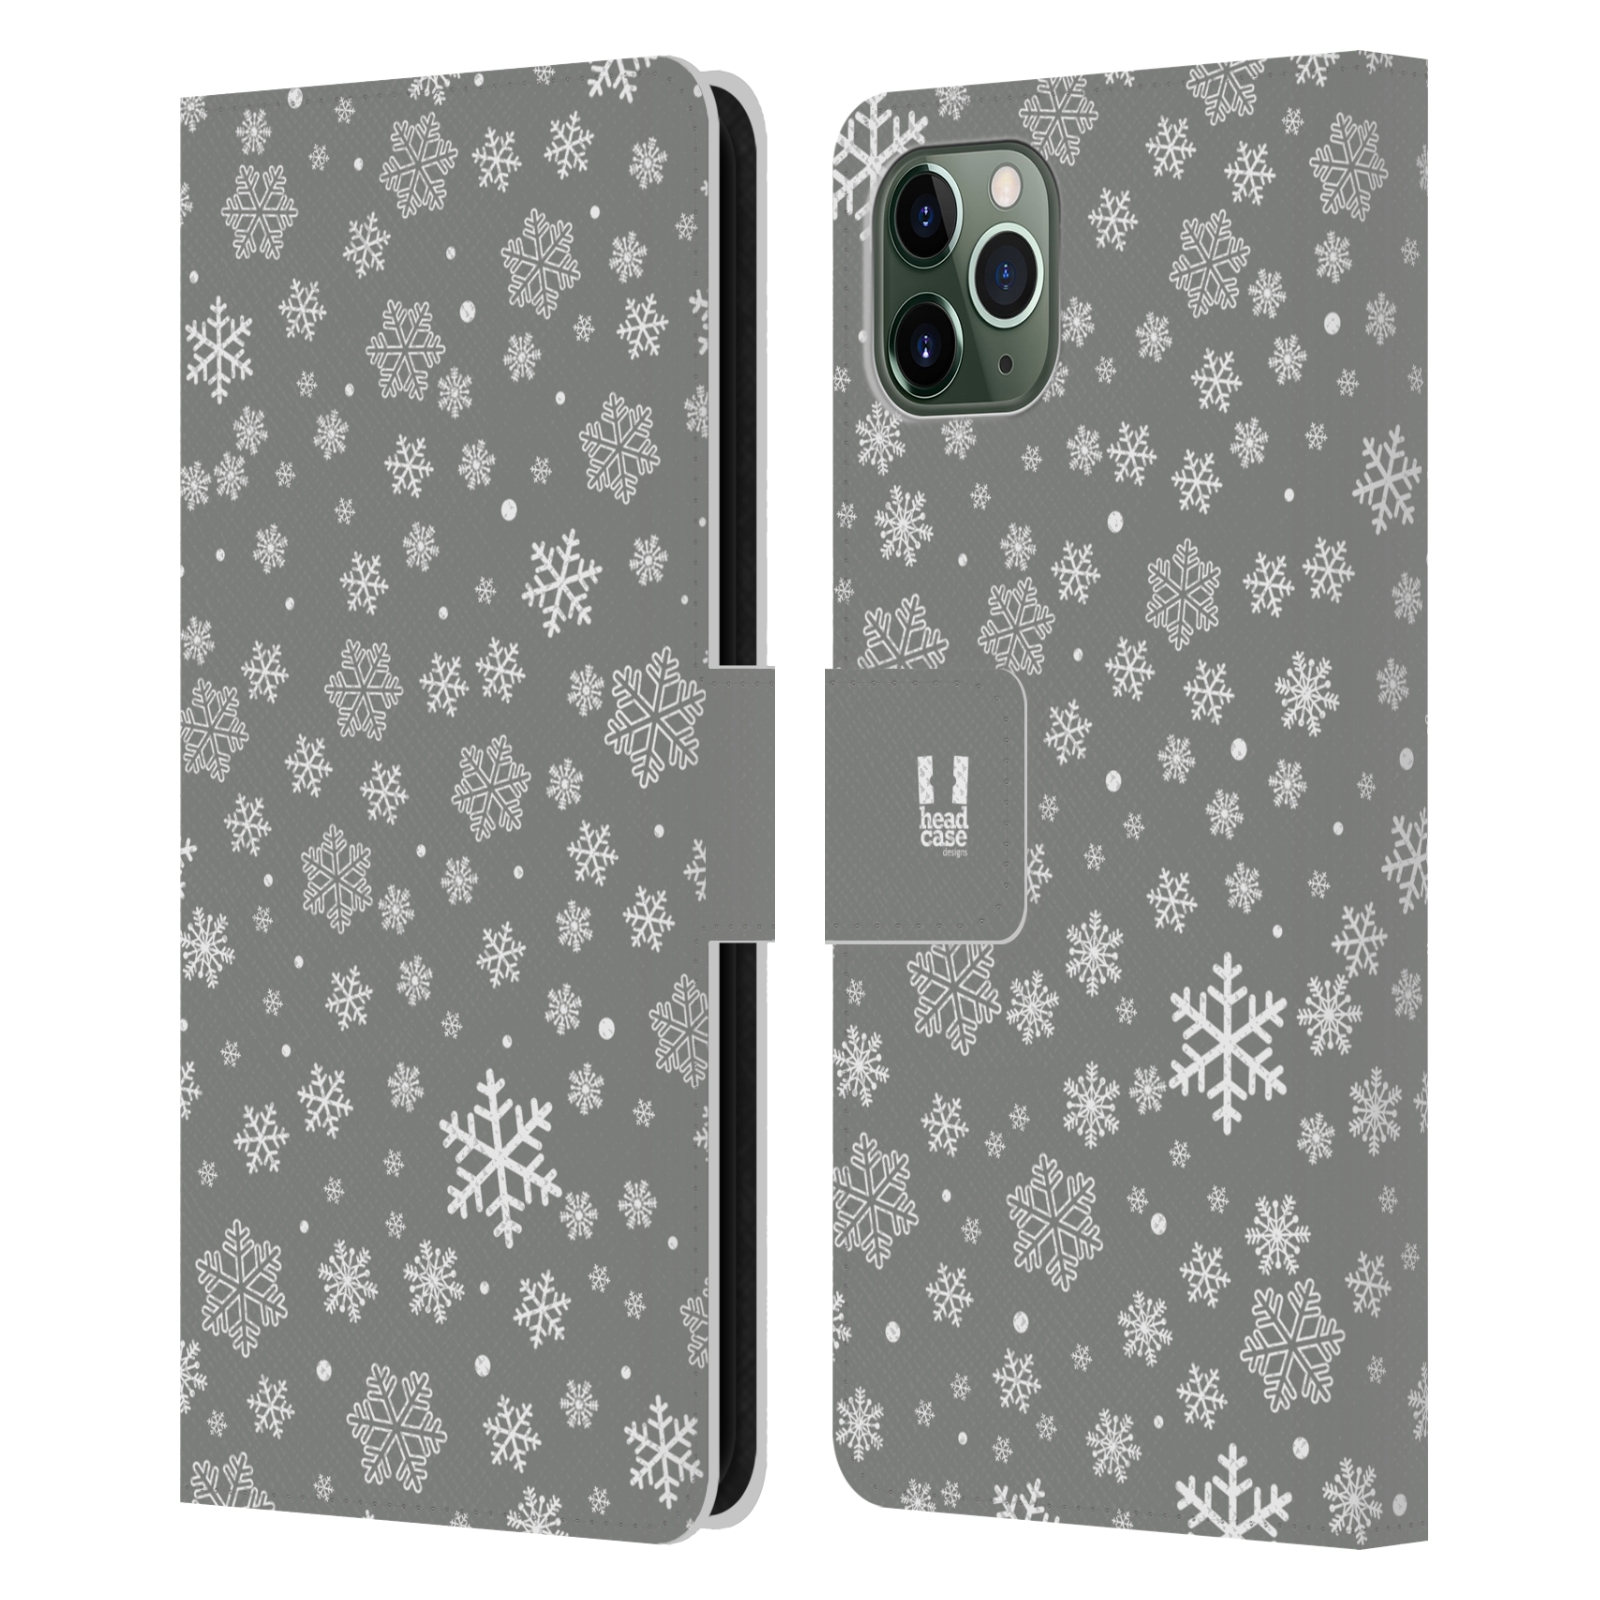 Pouzdro na mobil Apple Iphone 11 PRO MAX stříbrné vzory sněžná vločka